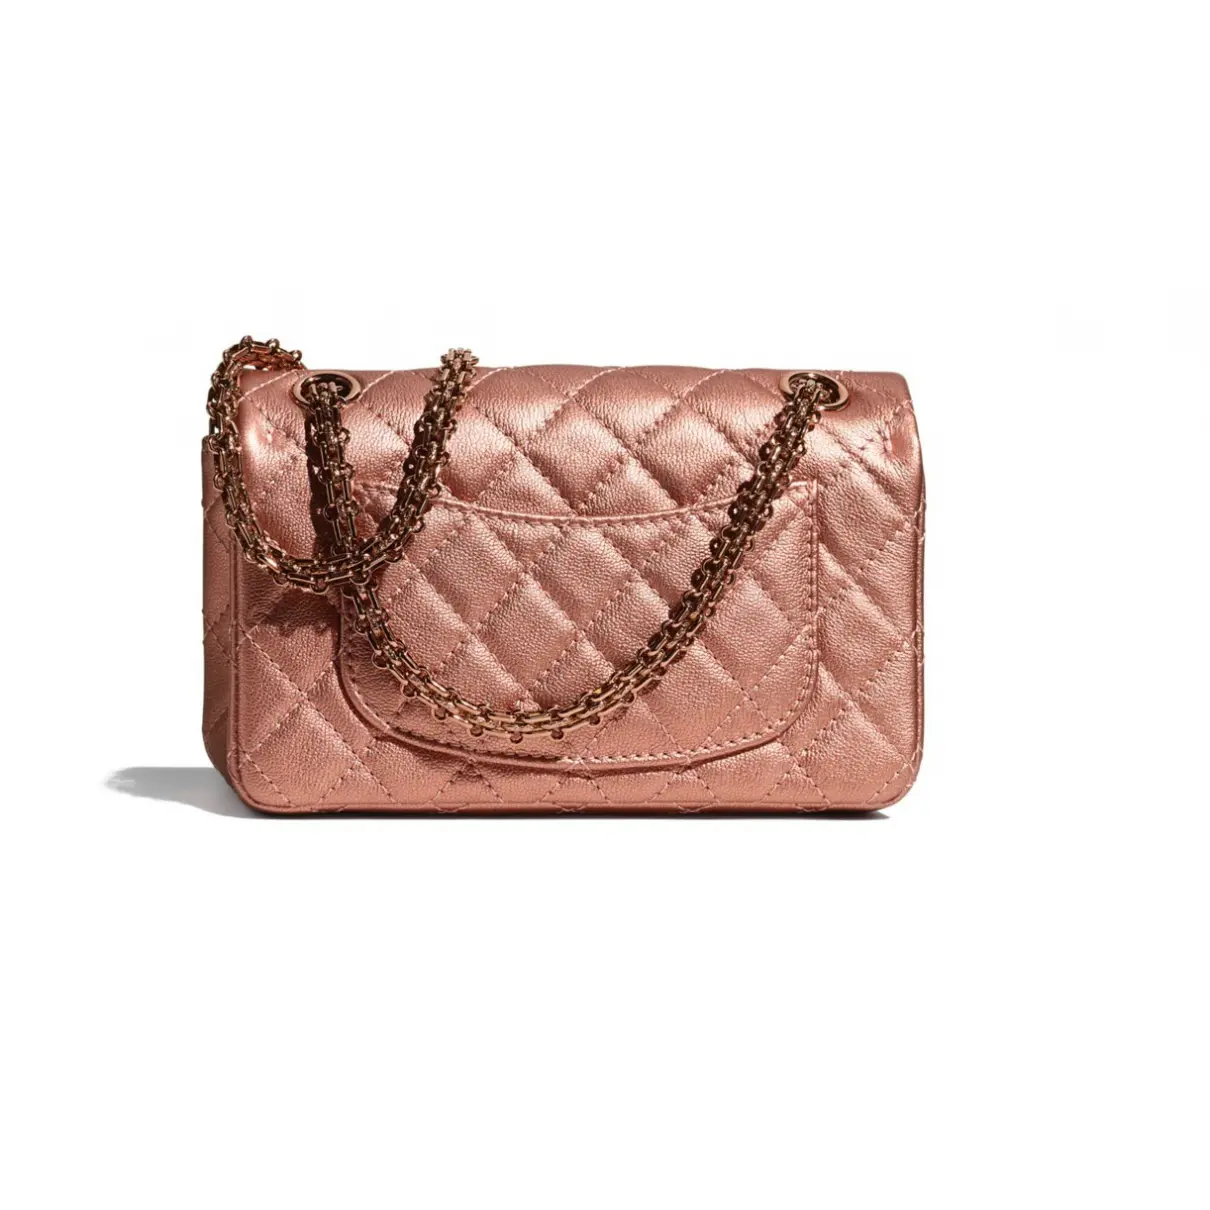 Buy Chanel 2.55 leather crossbody bag online